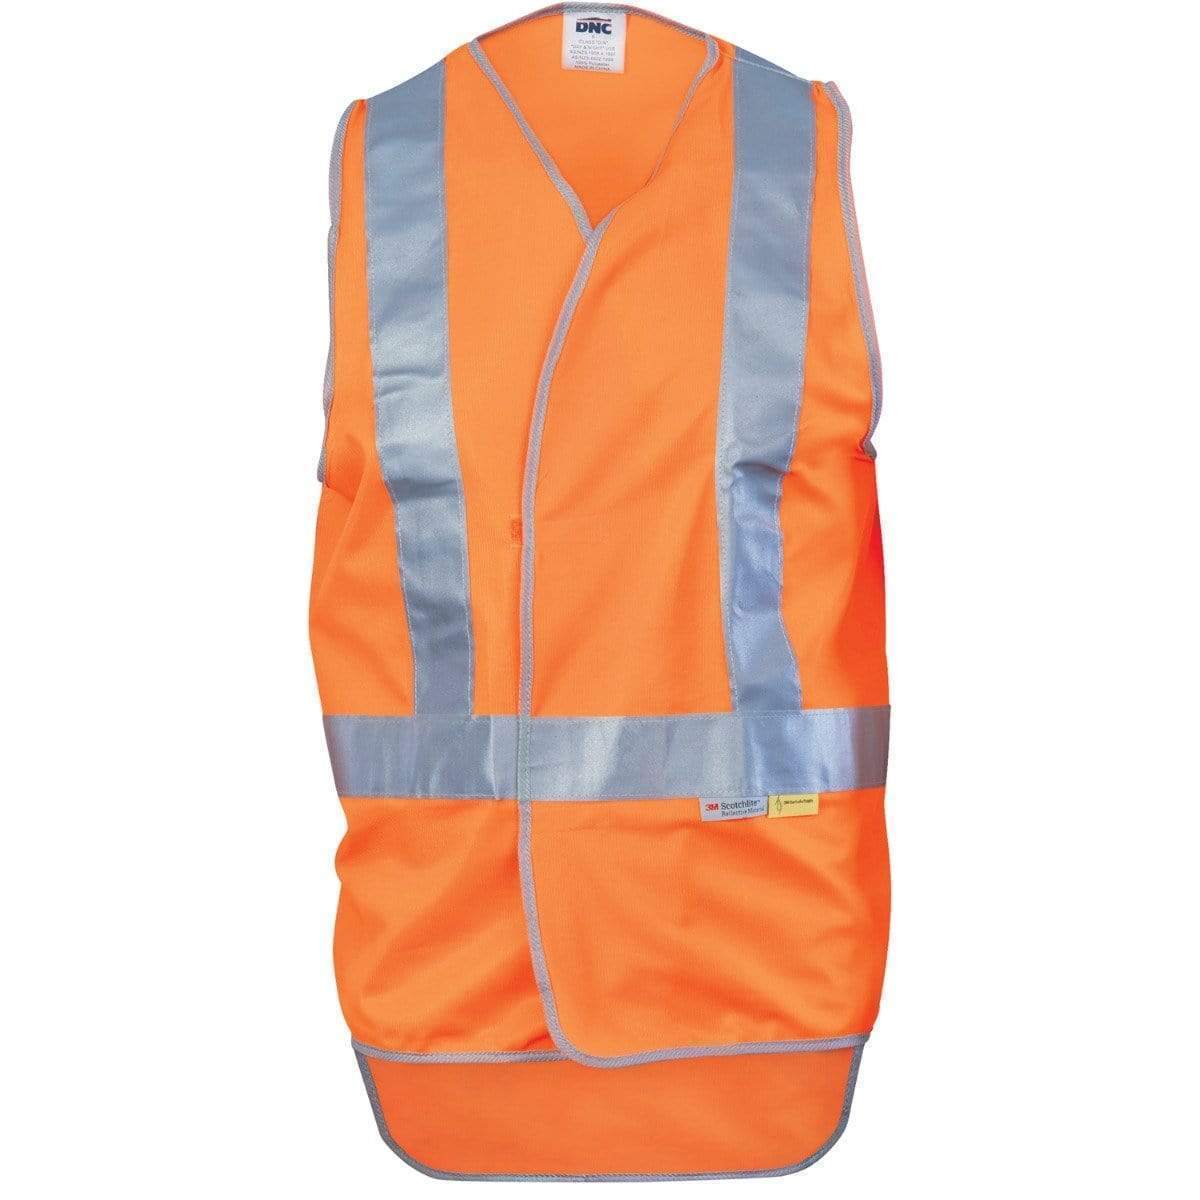 Dnc Workwear Day/night Cross Back Safety Vest With Tail - 3802 Work Wear DNC Workwear Orange S 